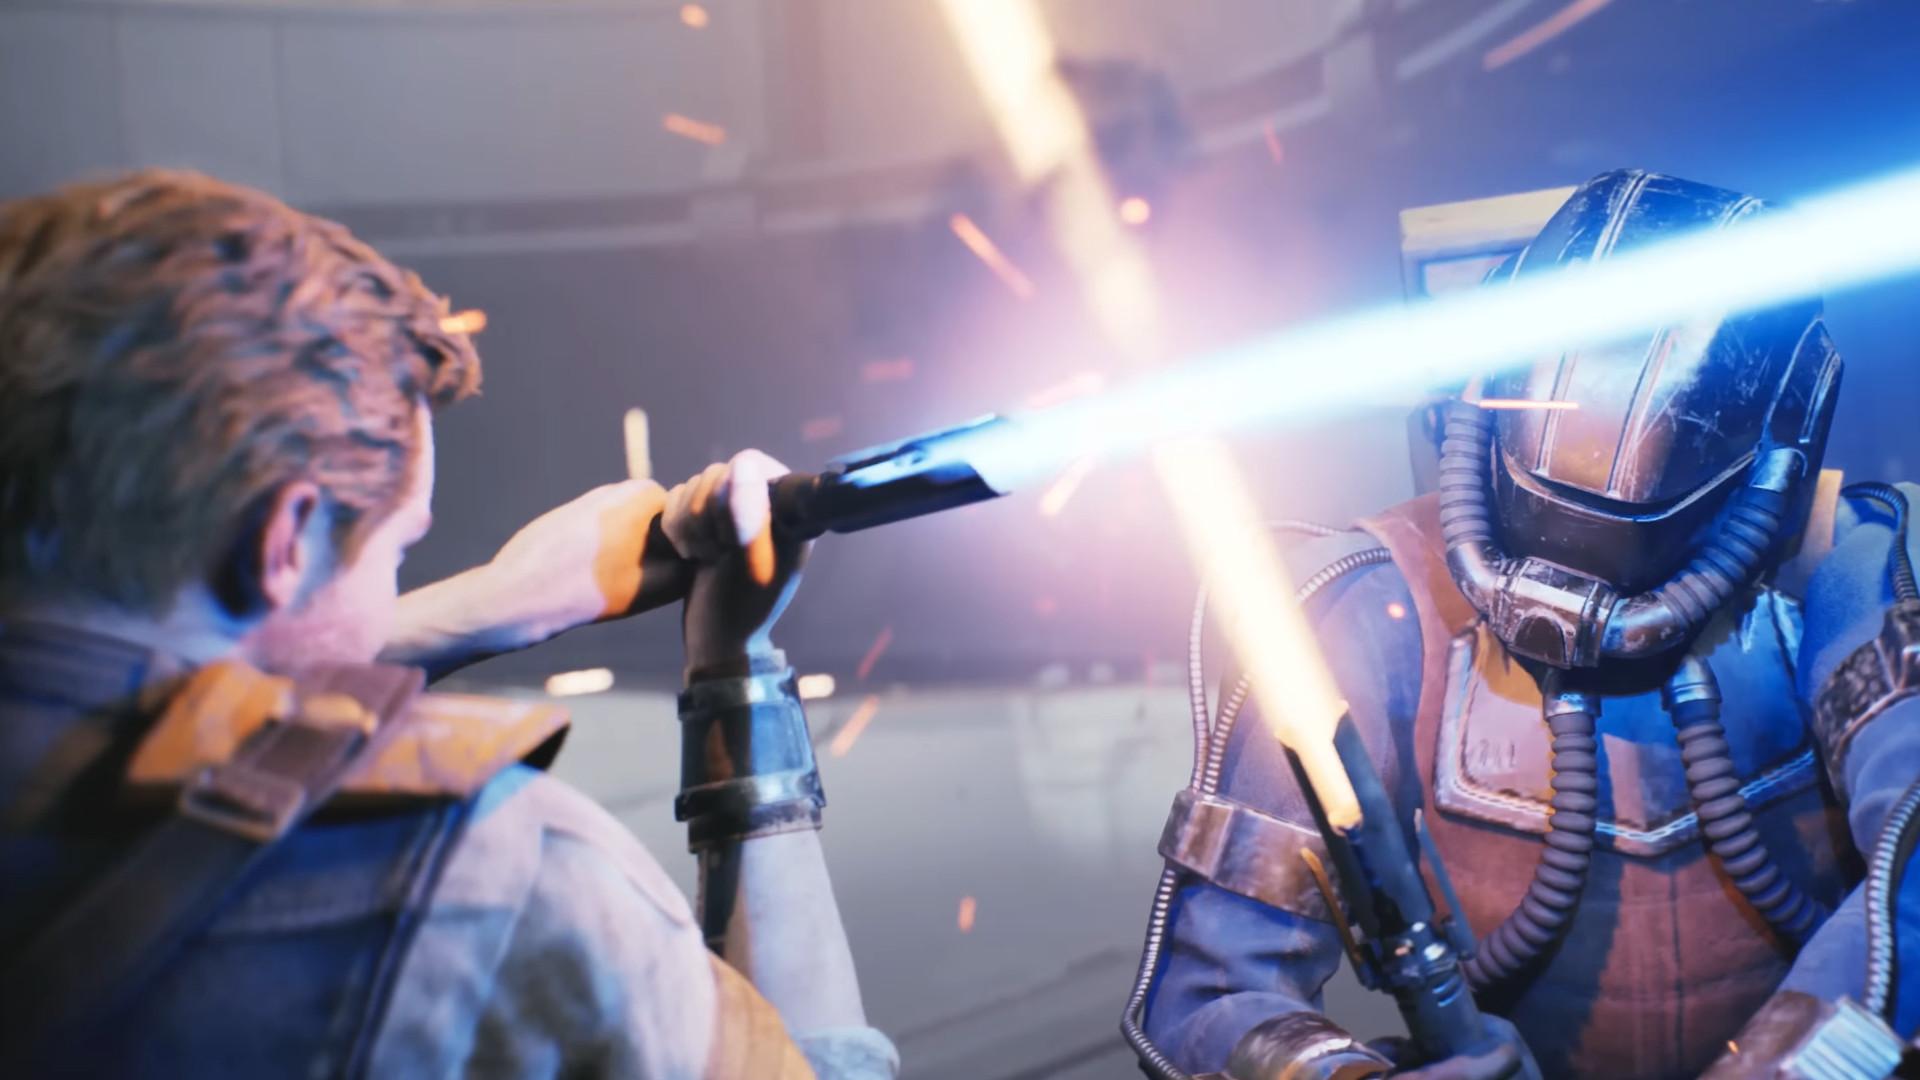 Will Star Wars Jedi: Survivor be on Switch, PS4, Xbox One?